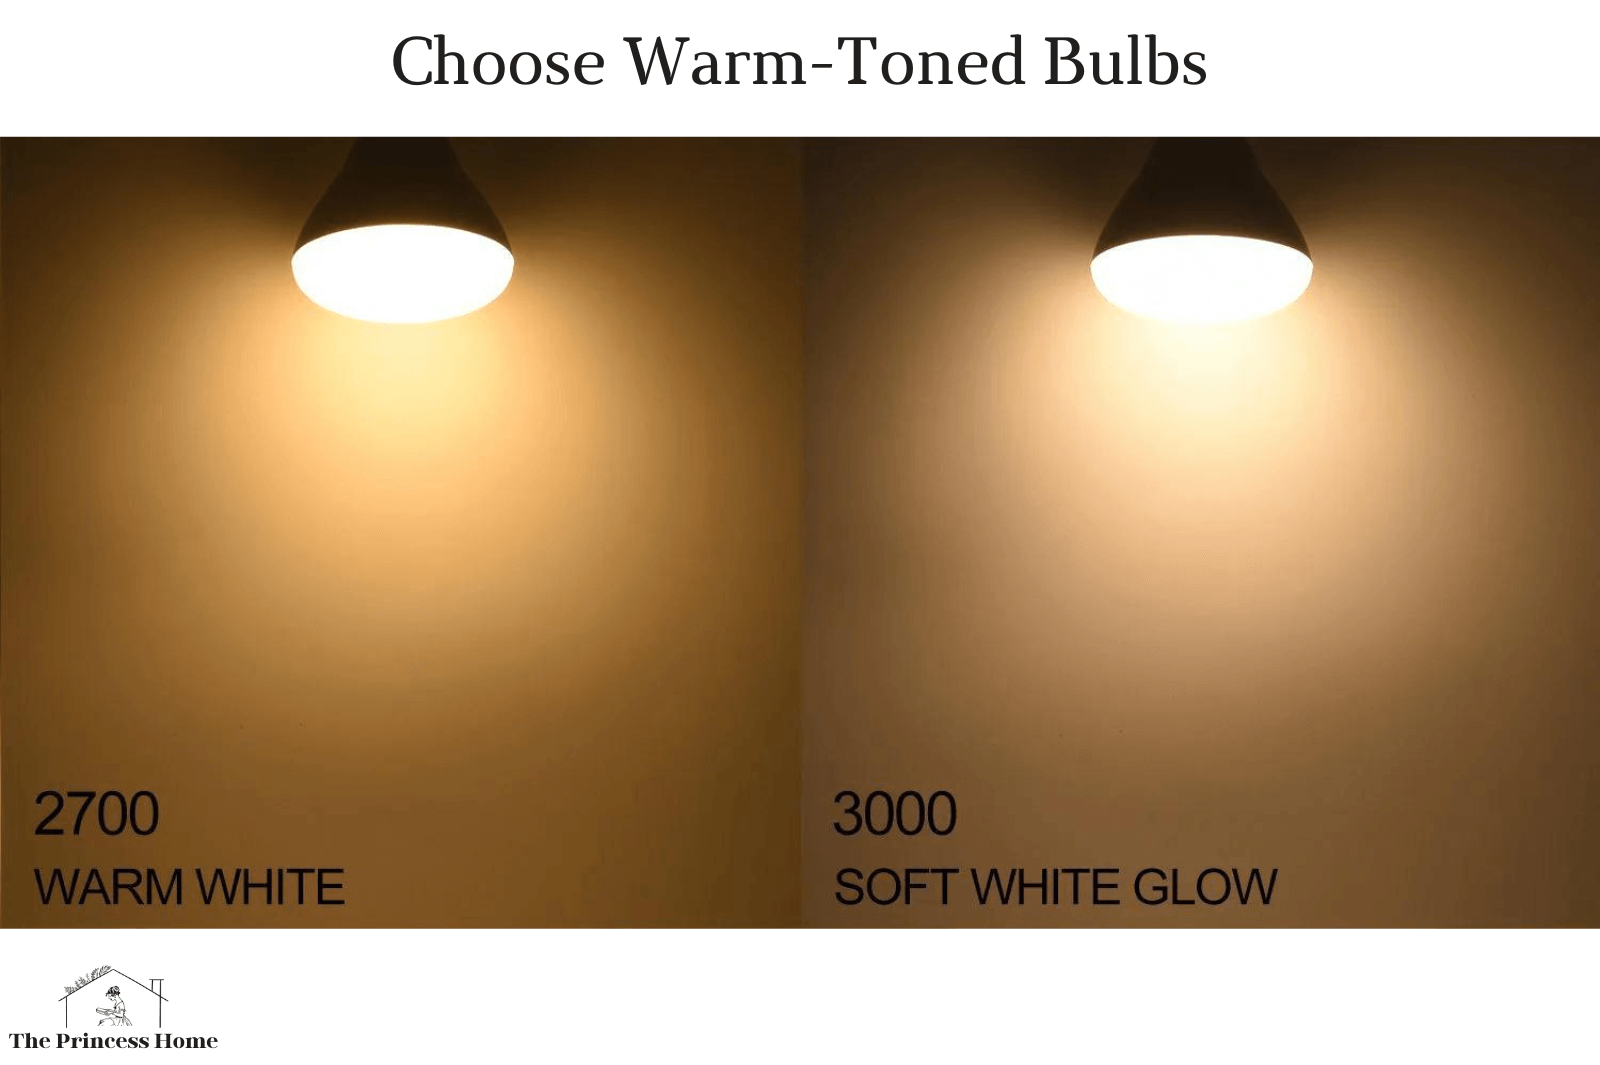 1.Choose Warm-Toned Bulbs: